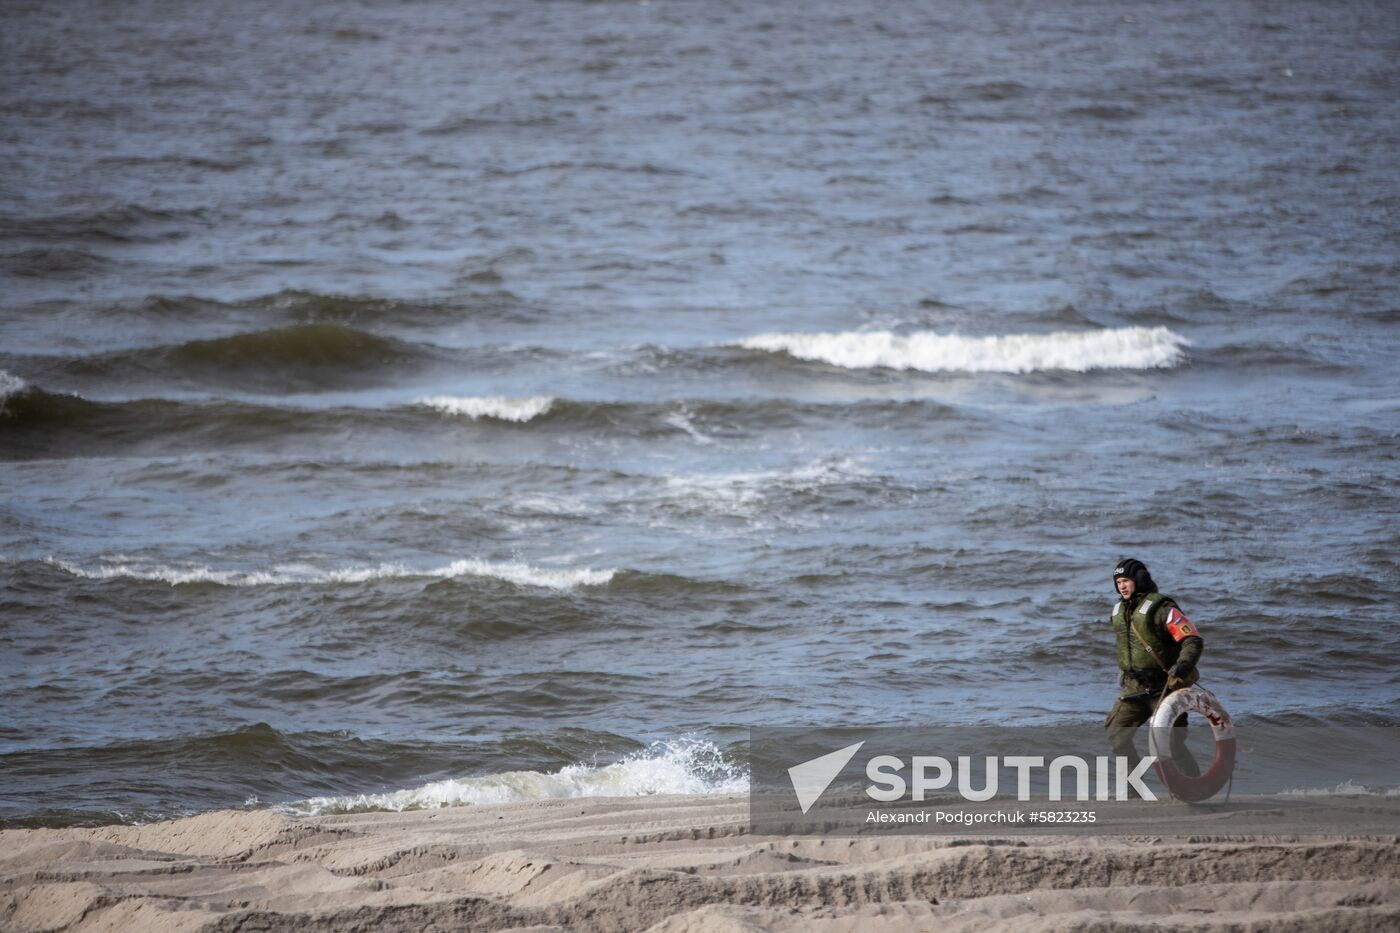 Russia Baltic Fleet Drills